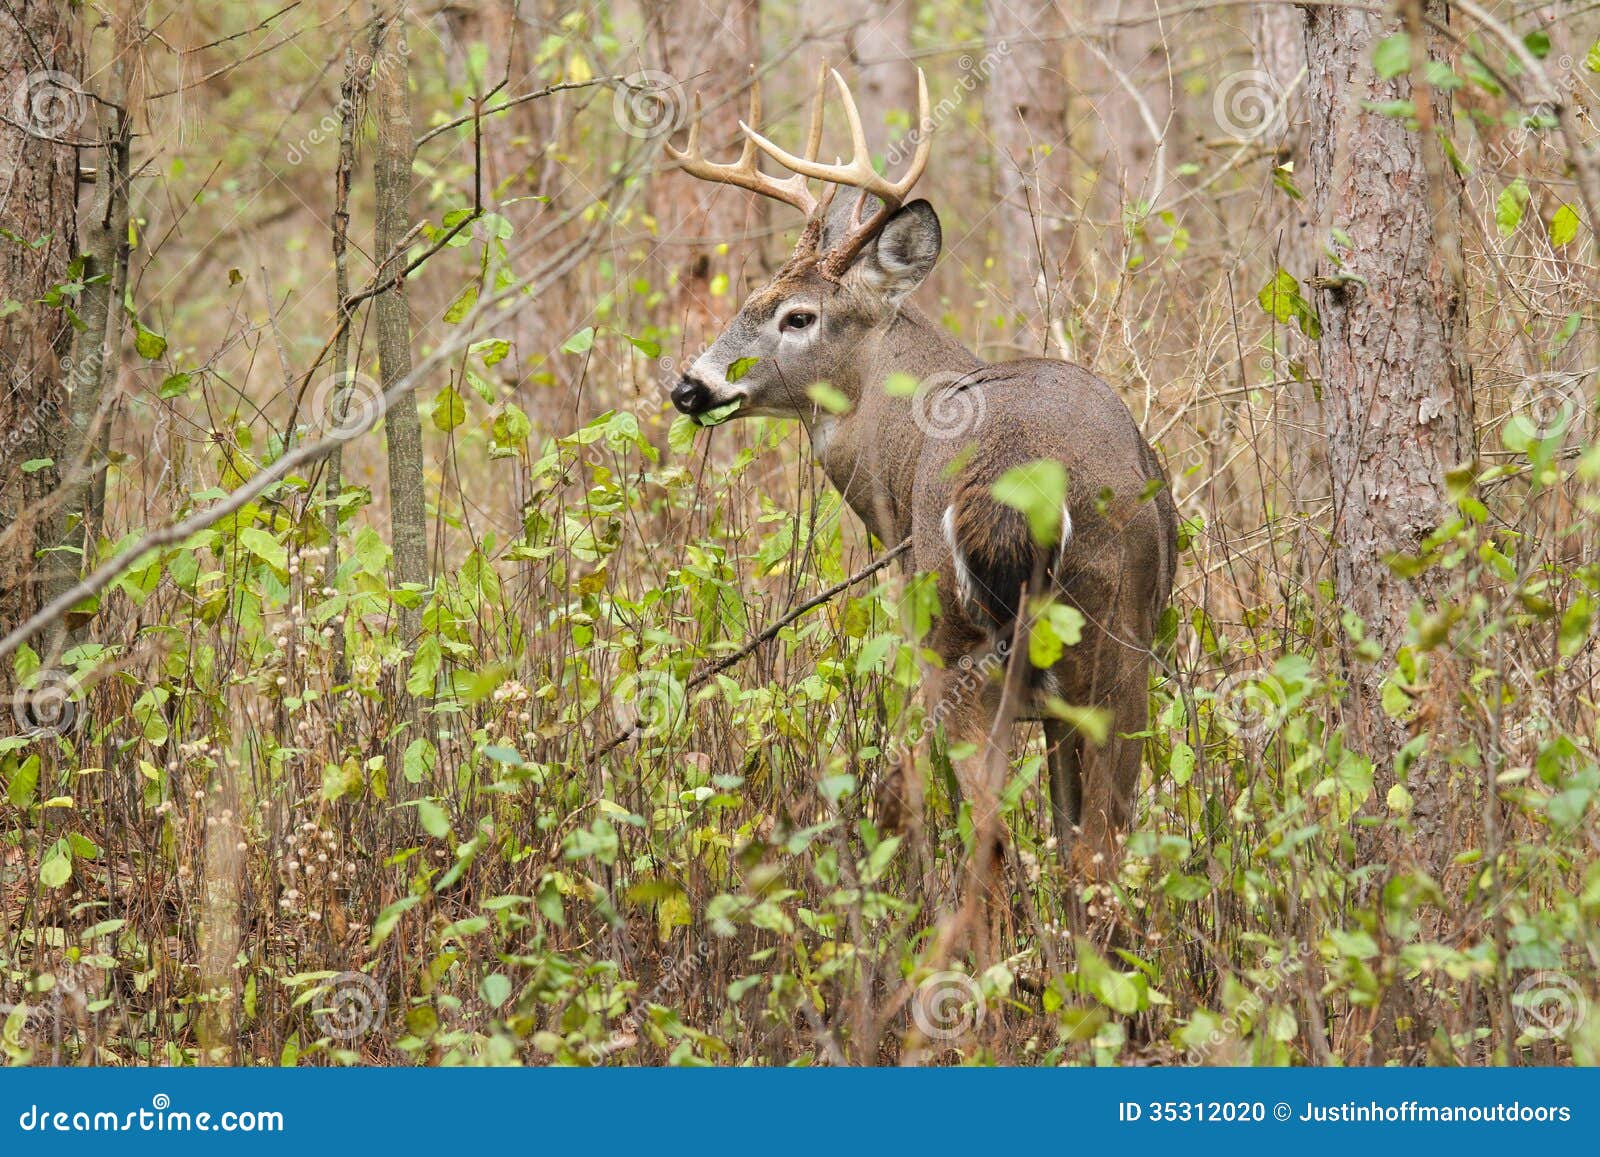 whitetail deer buck rut